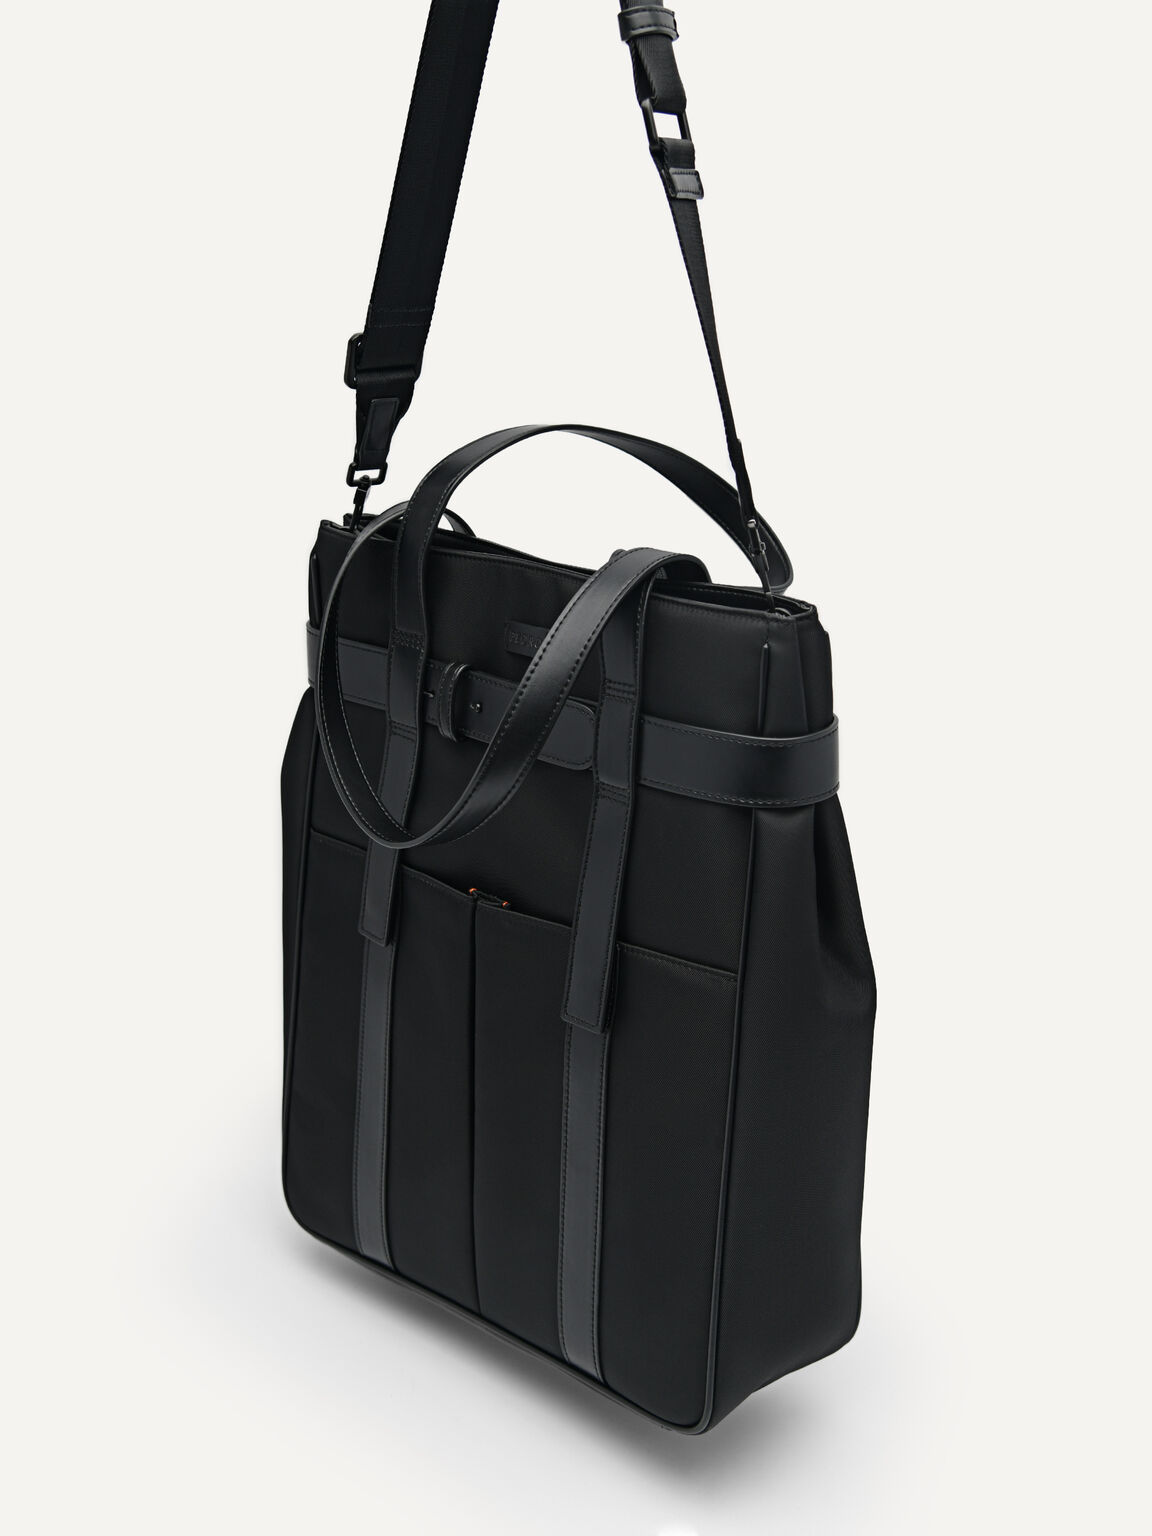 Rainier Tote Bag, Black